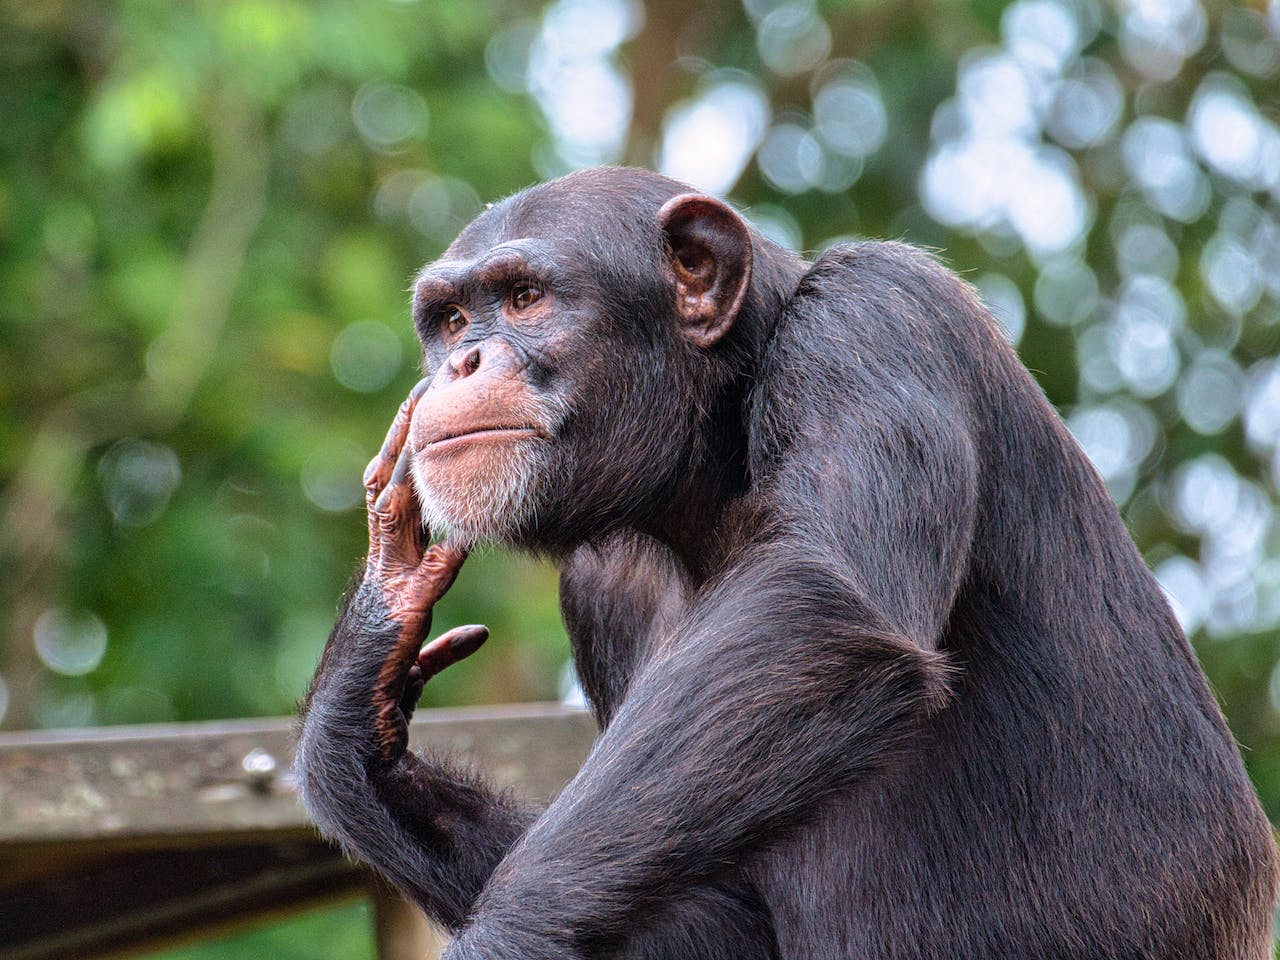 Chimpanzees also go through menopause

